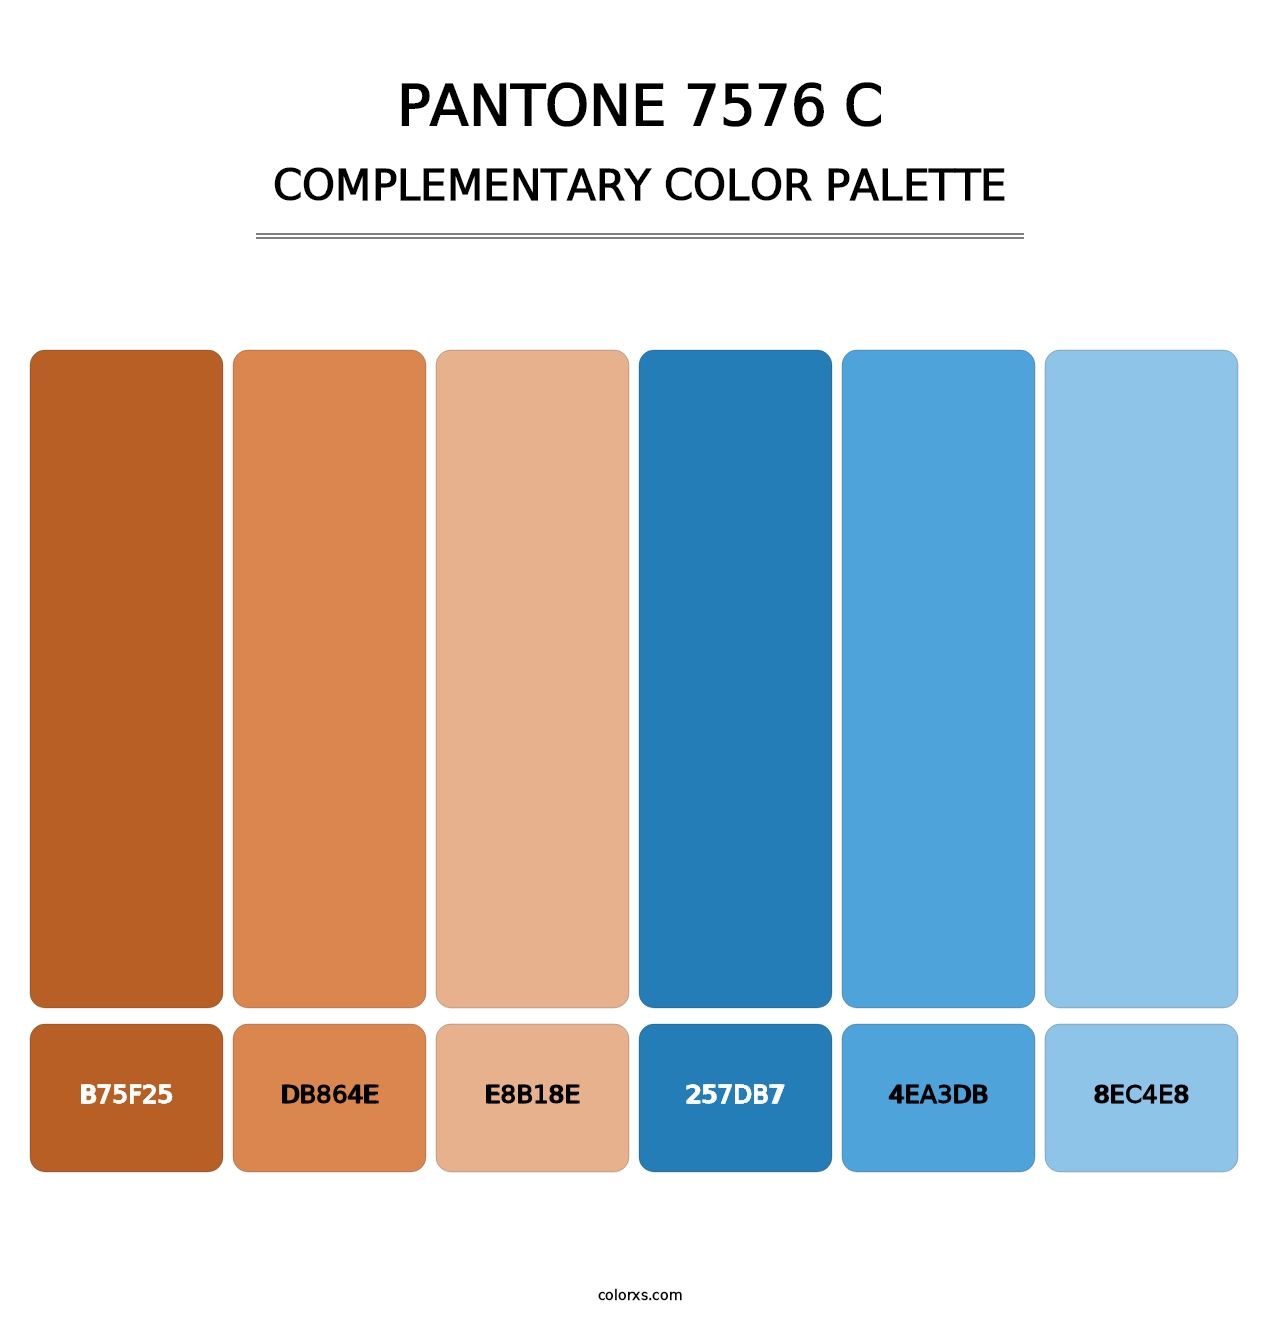 PANTONE 7576 C - Complementary Color Palette